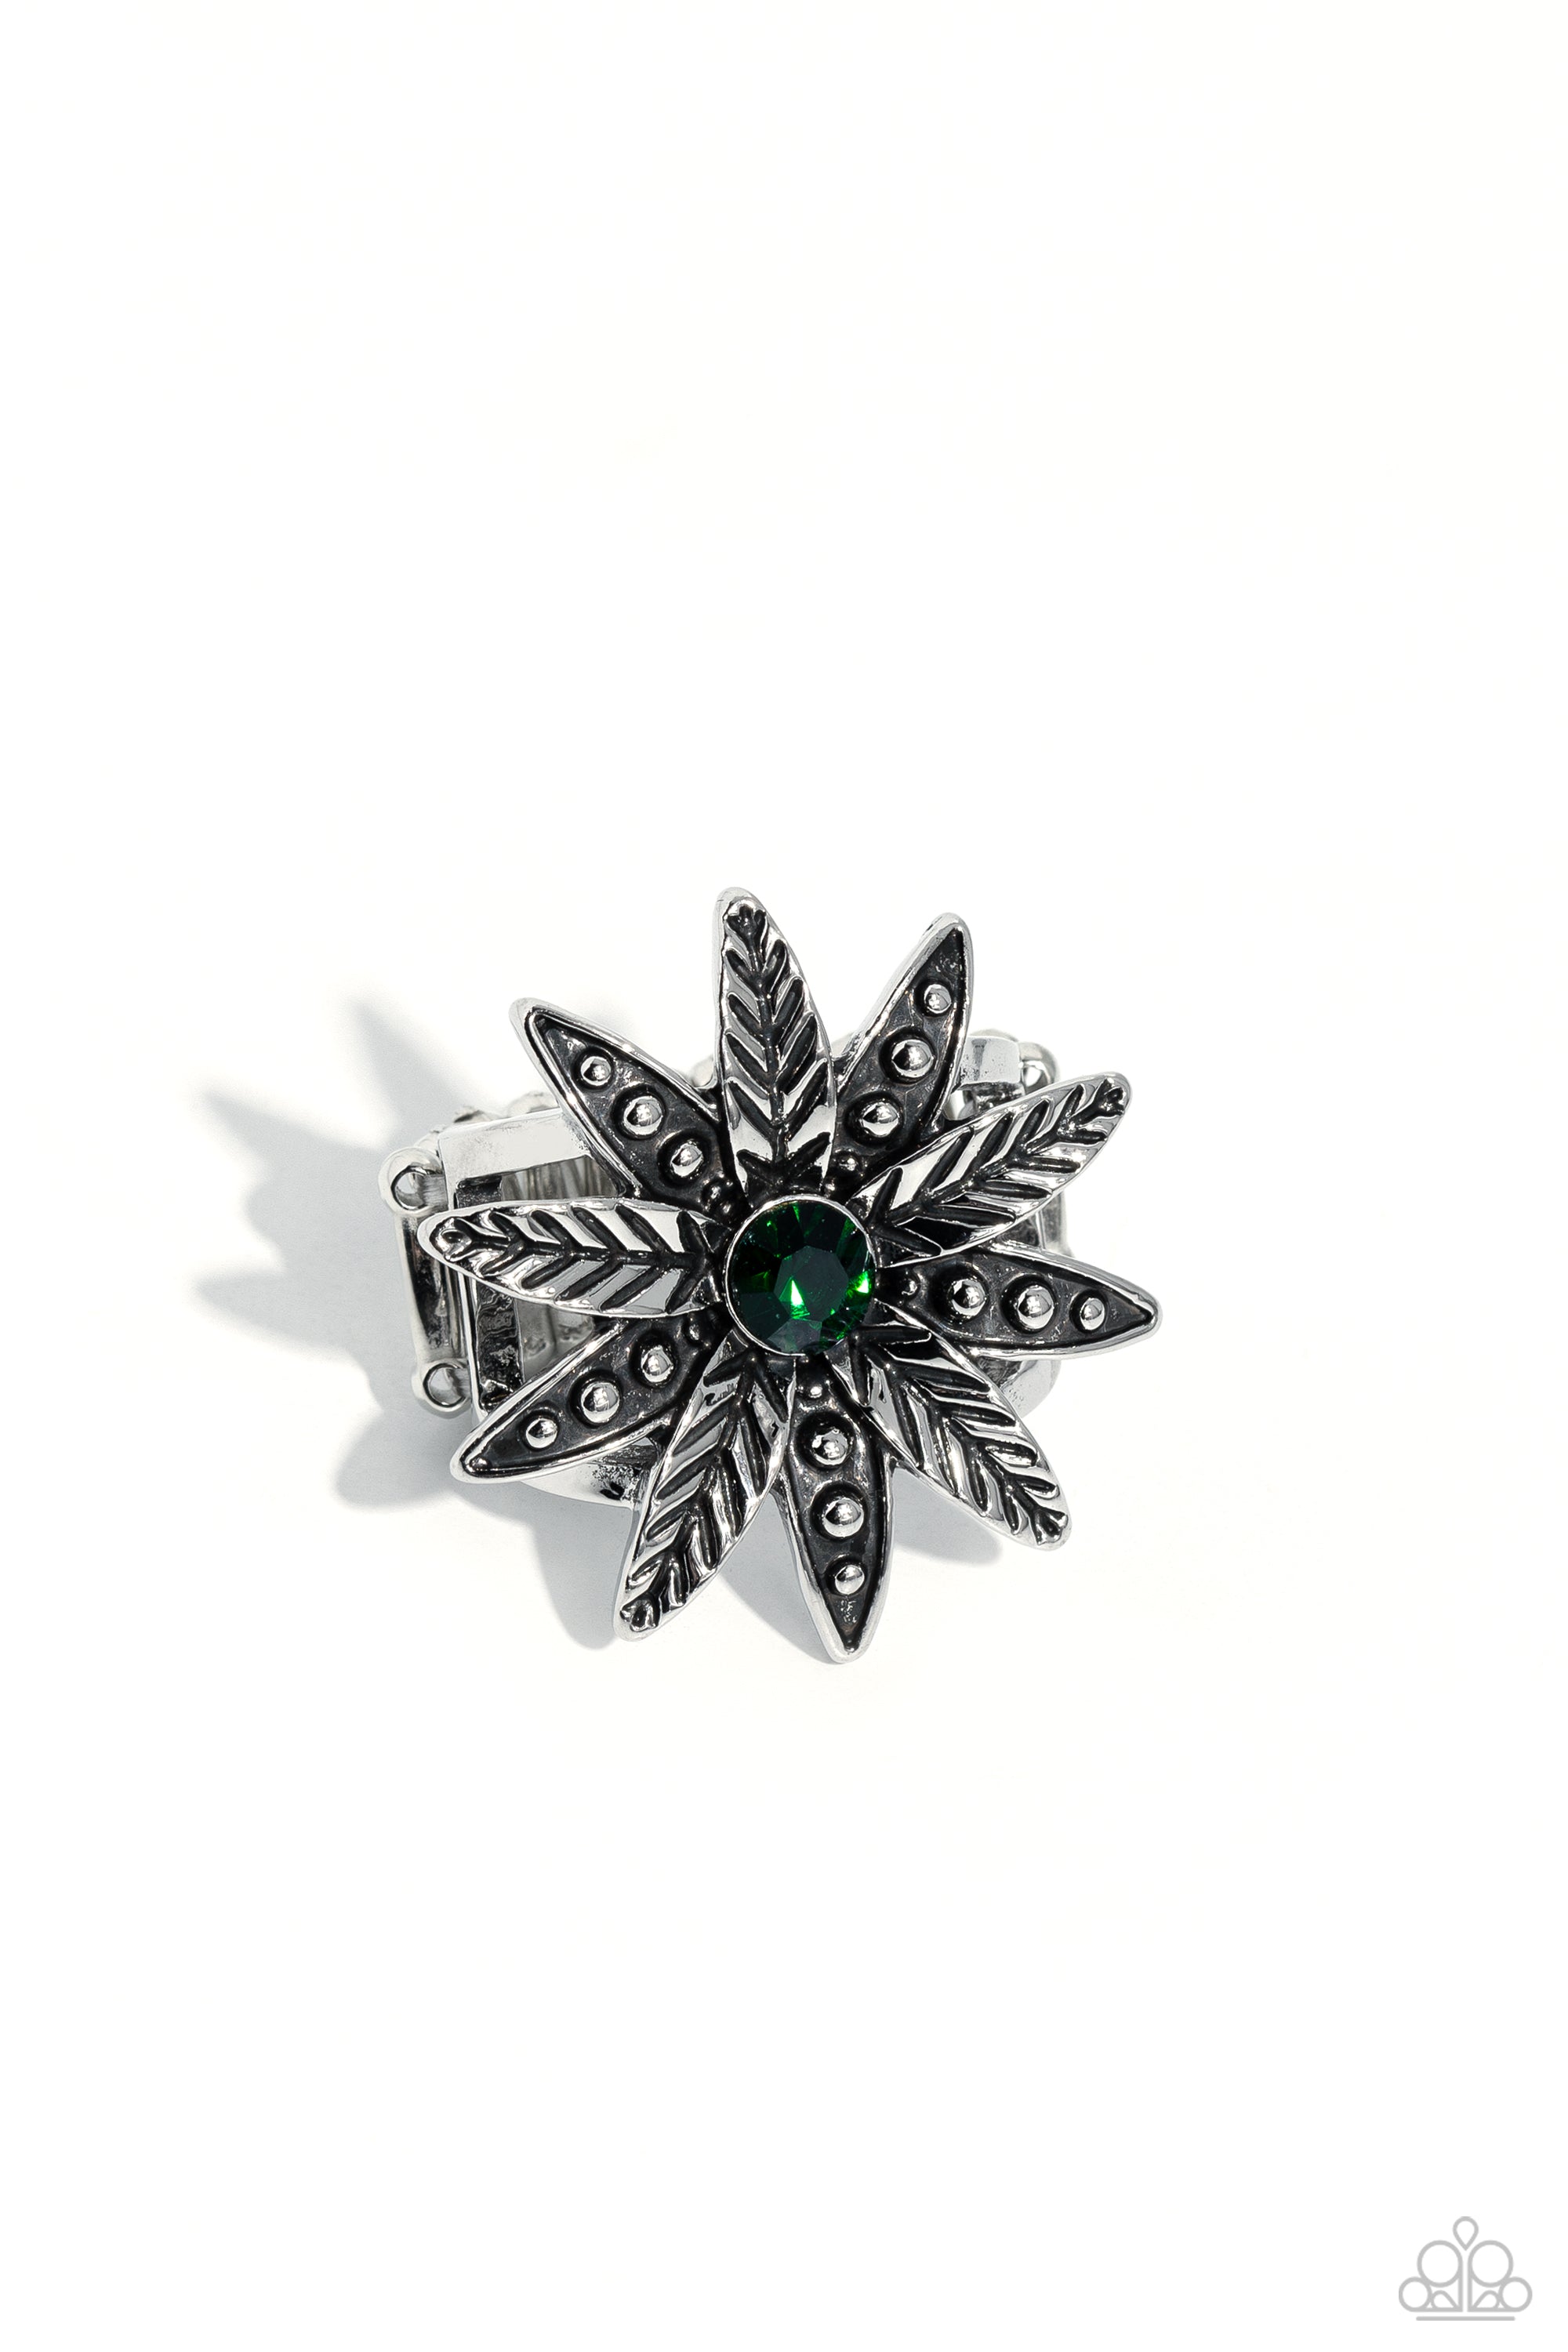 Sunflower Season Green Ring - Paparazzi Accessories- lightbox - CarasShop.com - $5 Jewelry by Cara Jewels